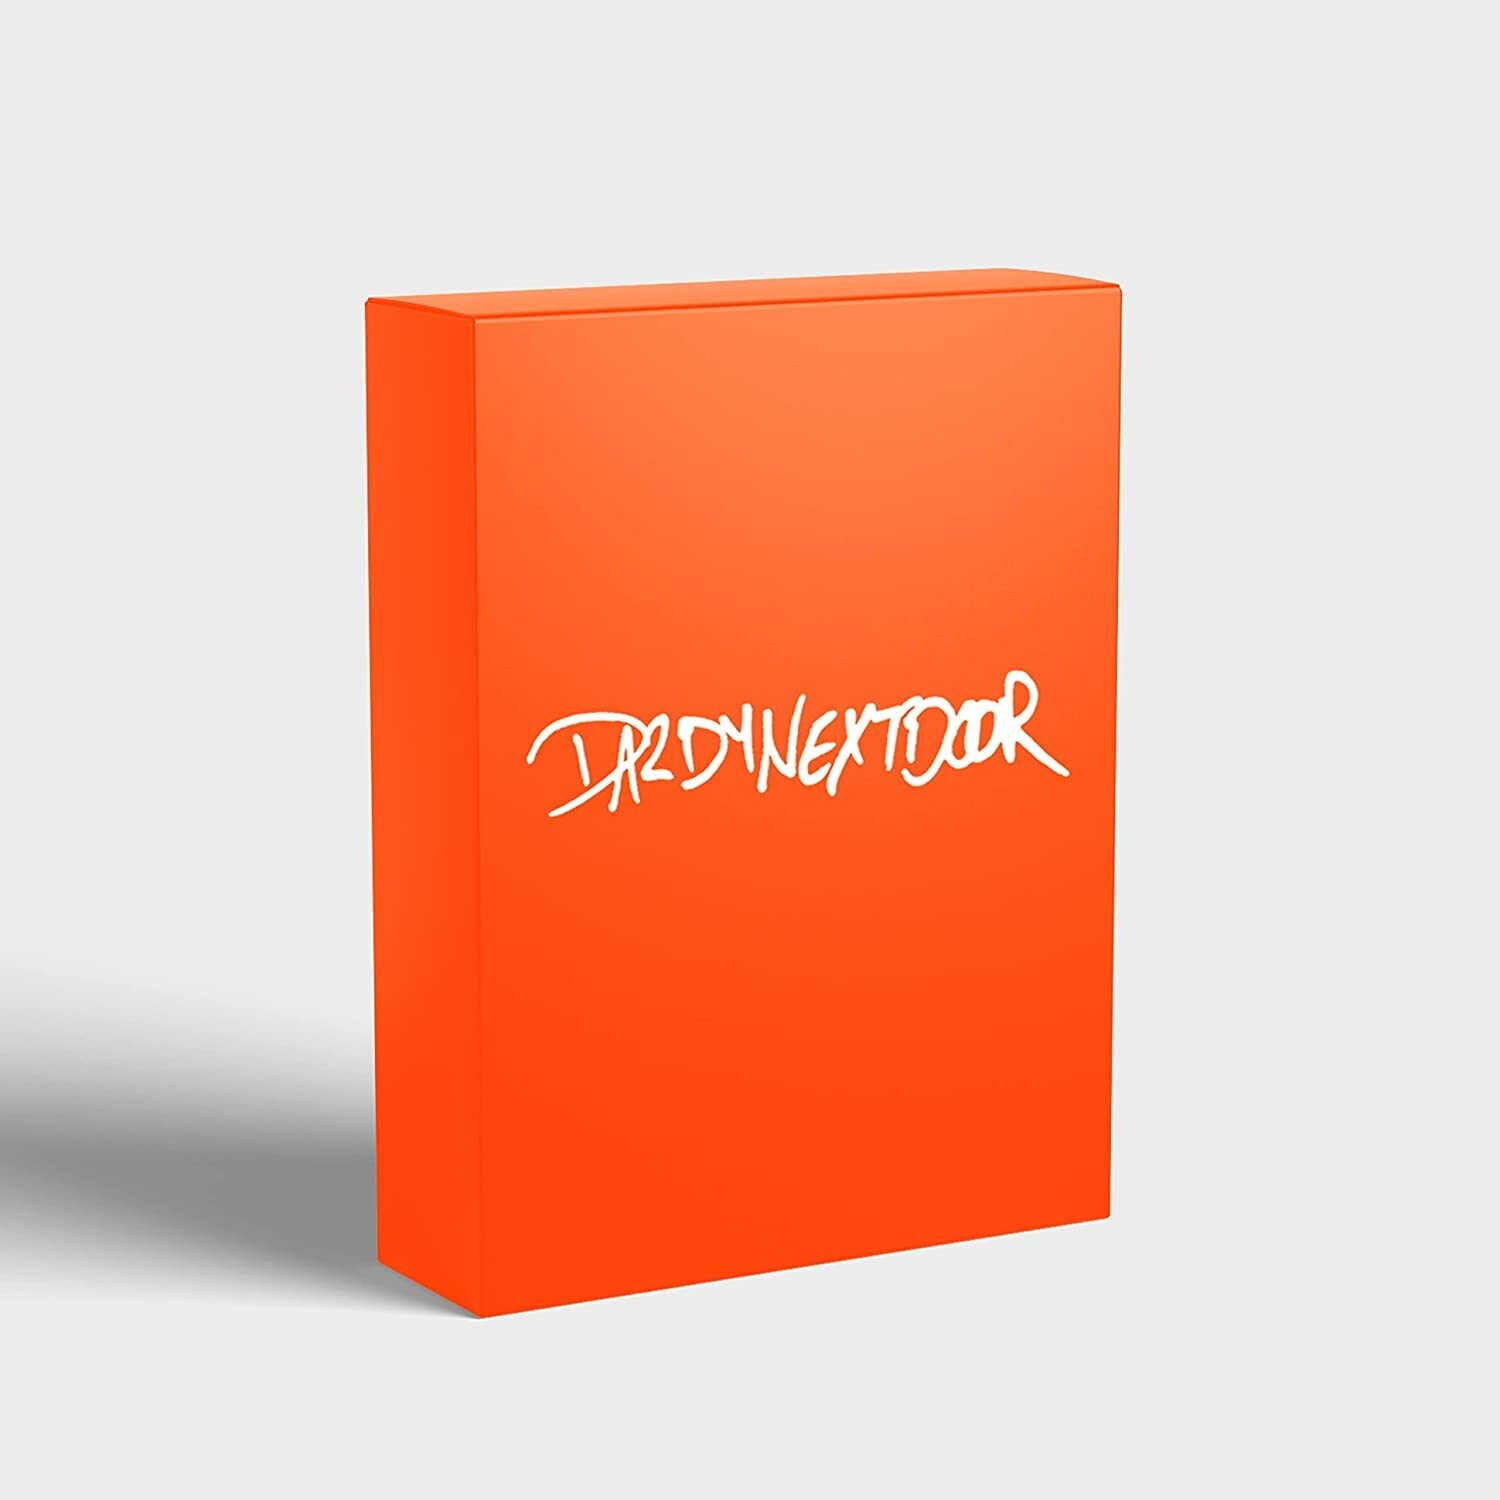 Dardan - DardyNextDoor (Limited Deluxe Box)(2022) CD